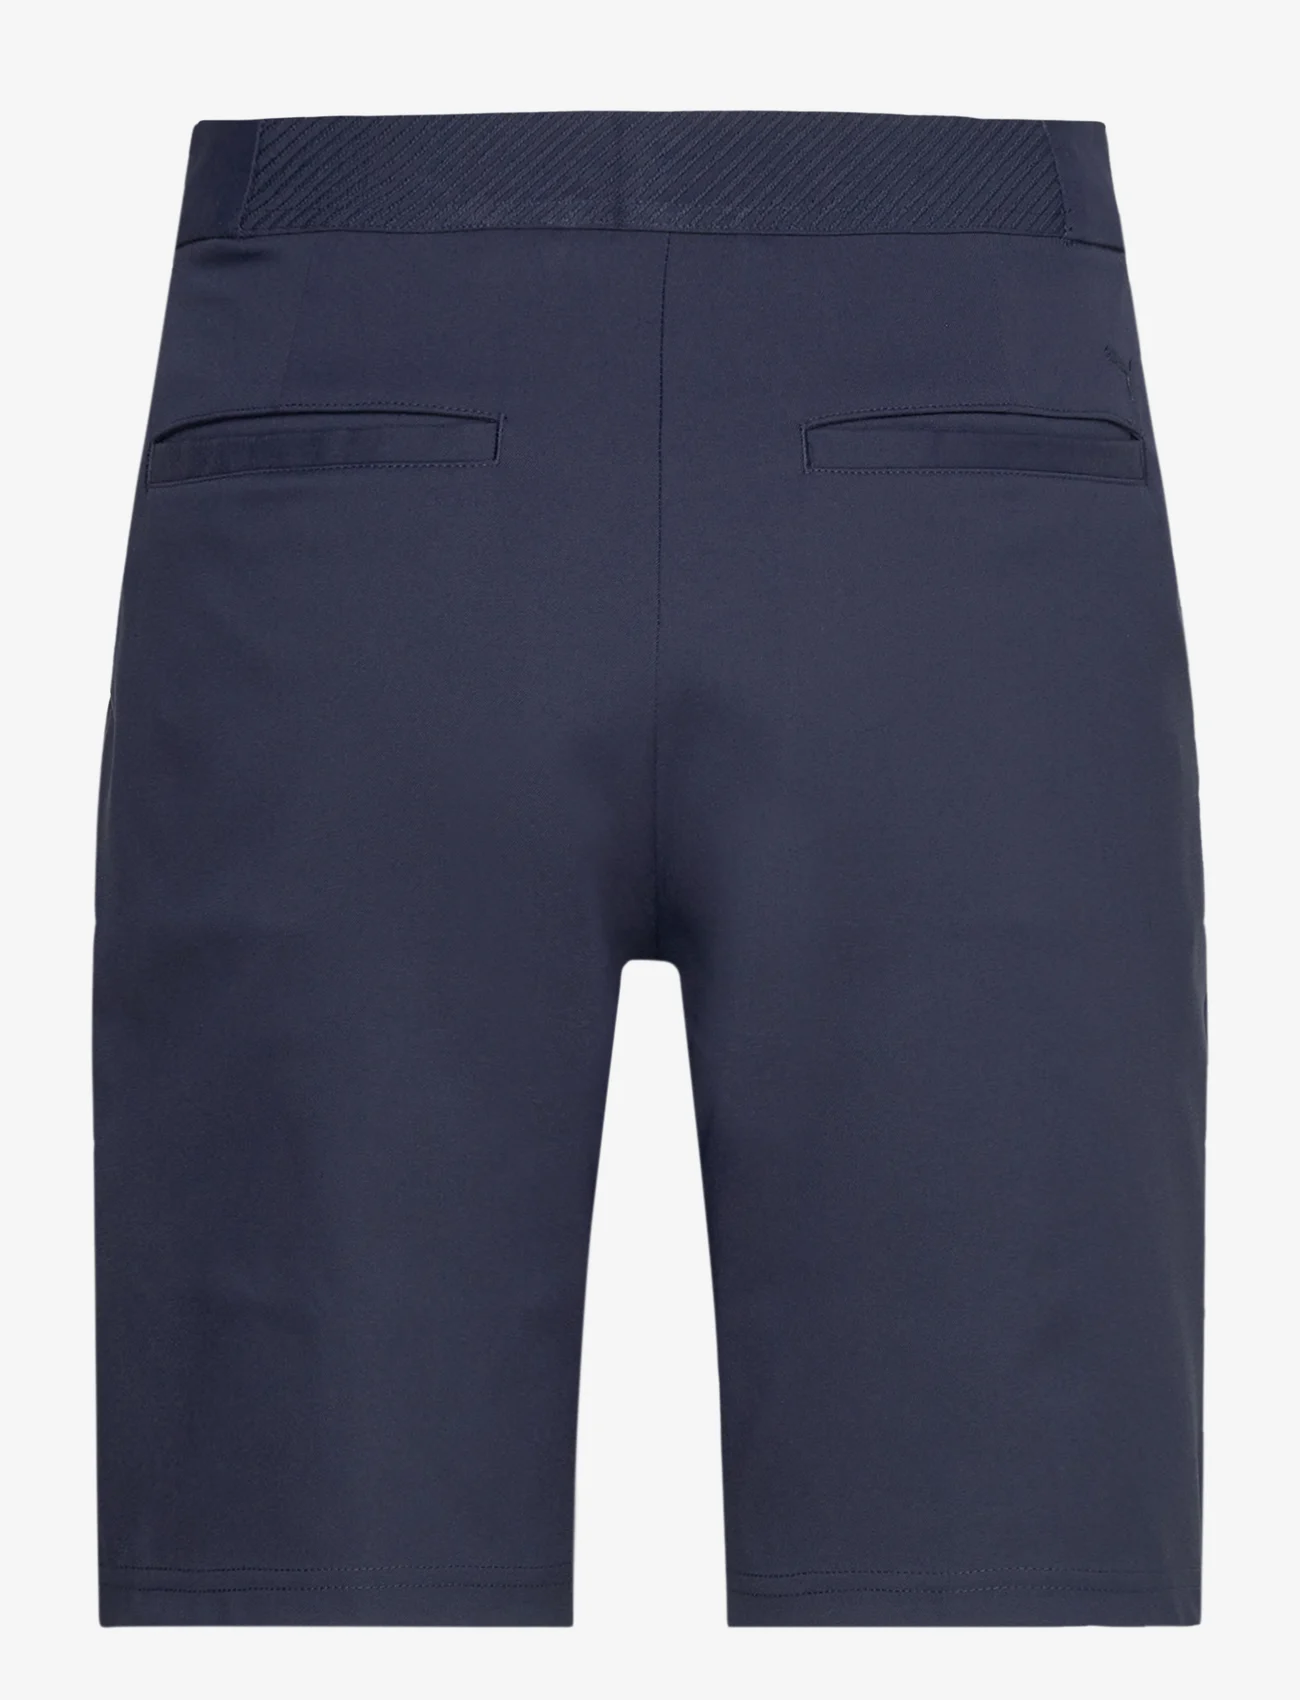 PUMA Golf - W Costa Short 8.5" - sports shorts - deep navy - 1